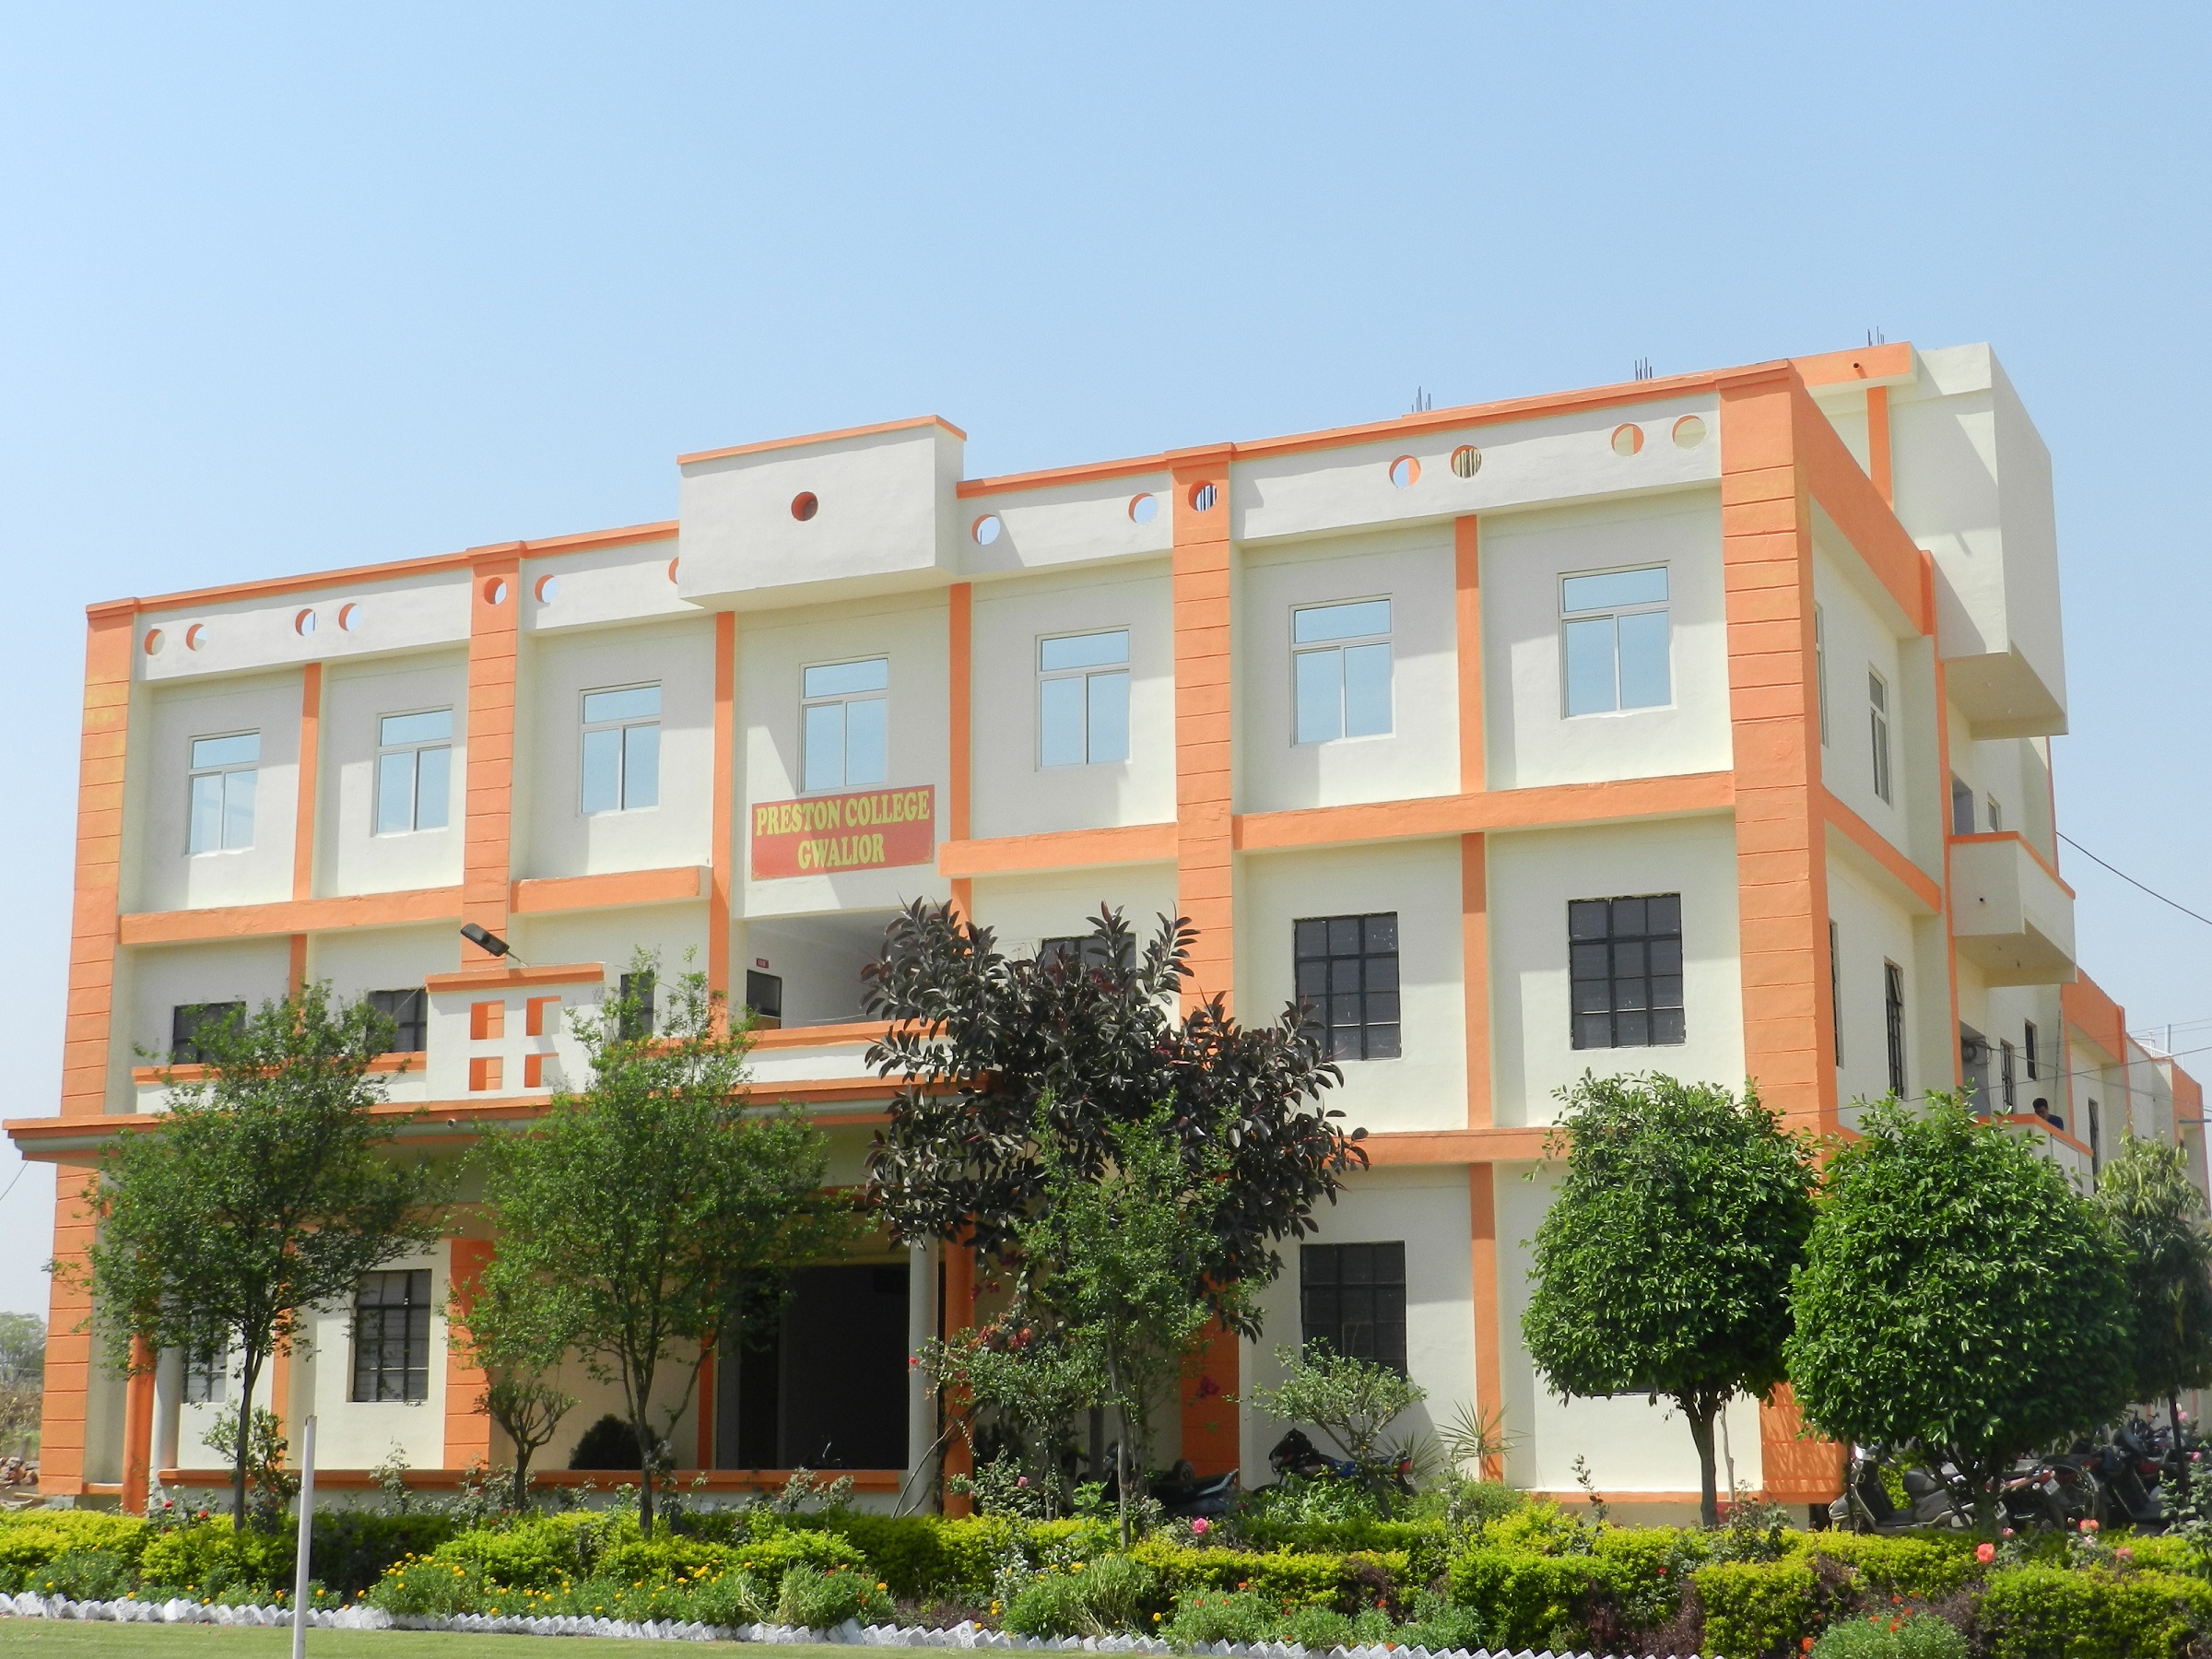 Preston College, Gwalior Image